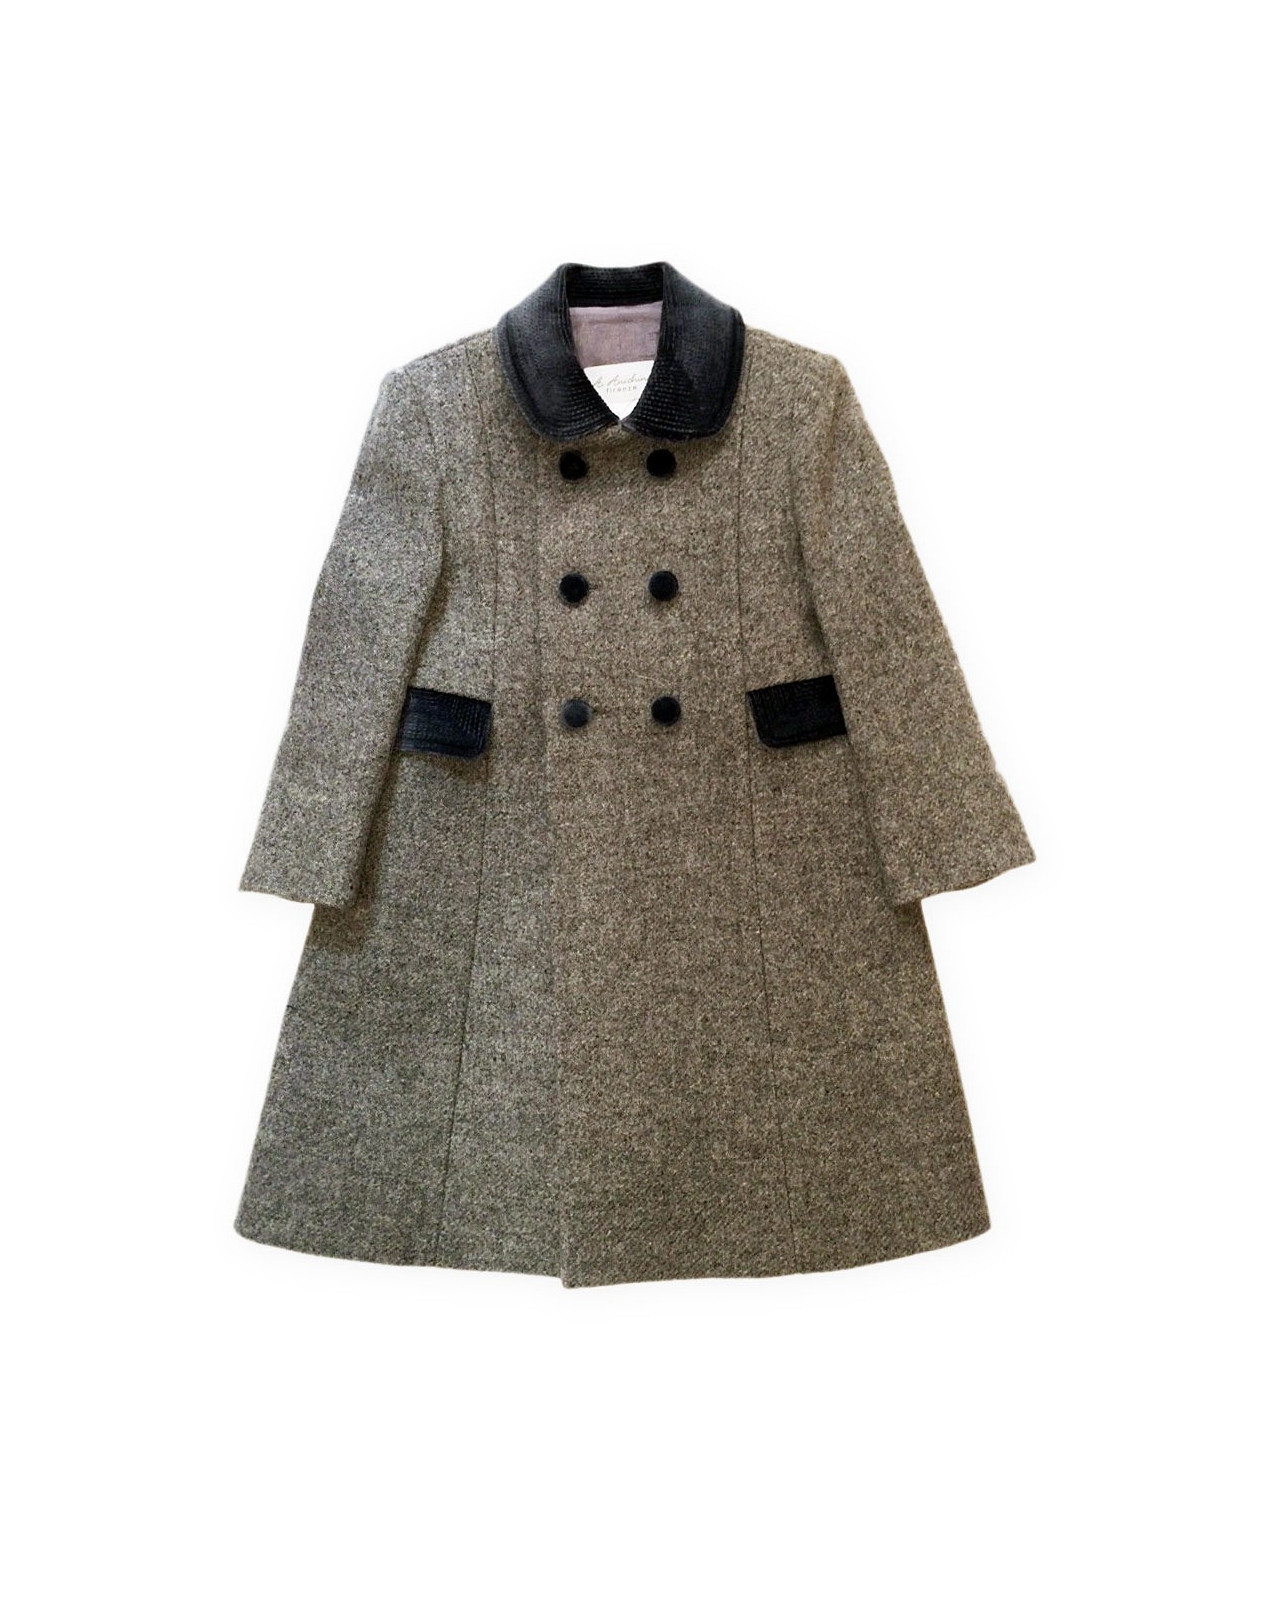 redingote style coat for child, pure wool shetland